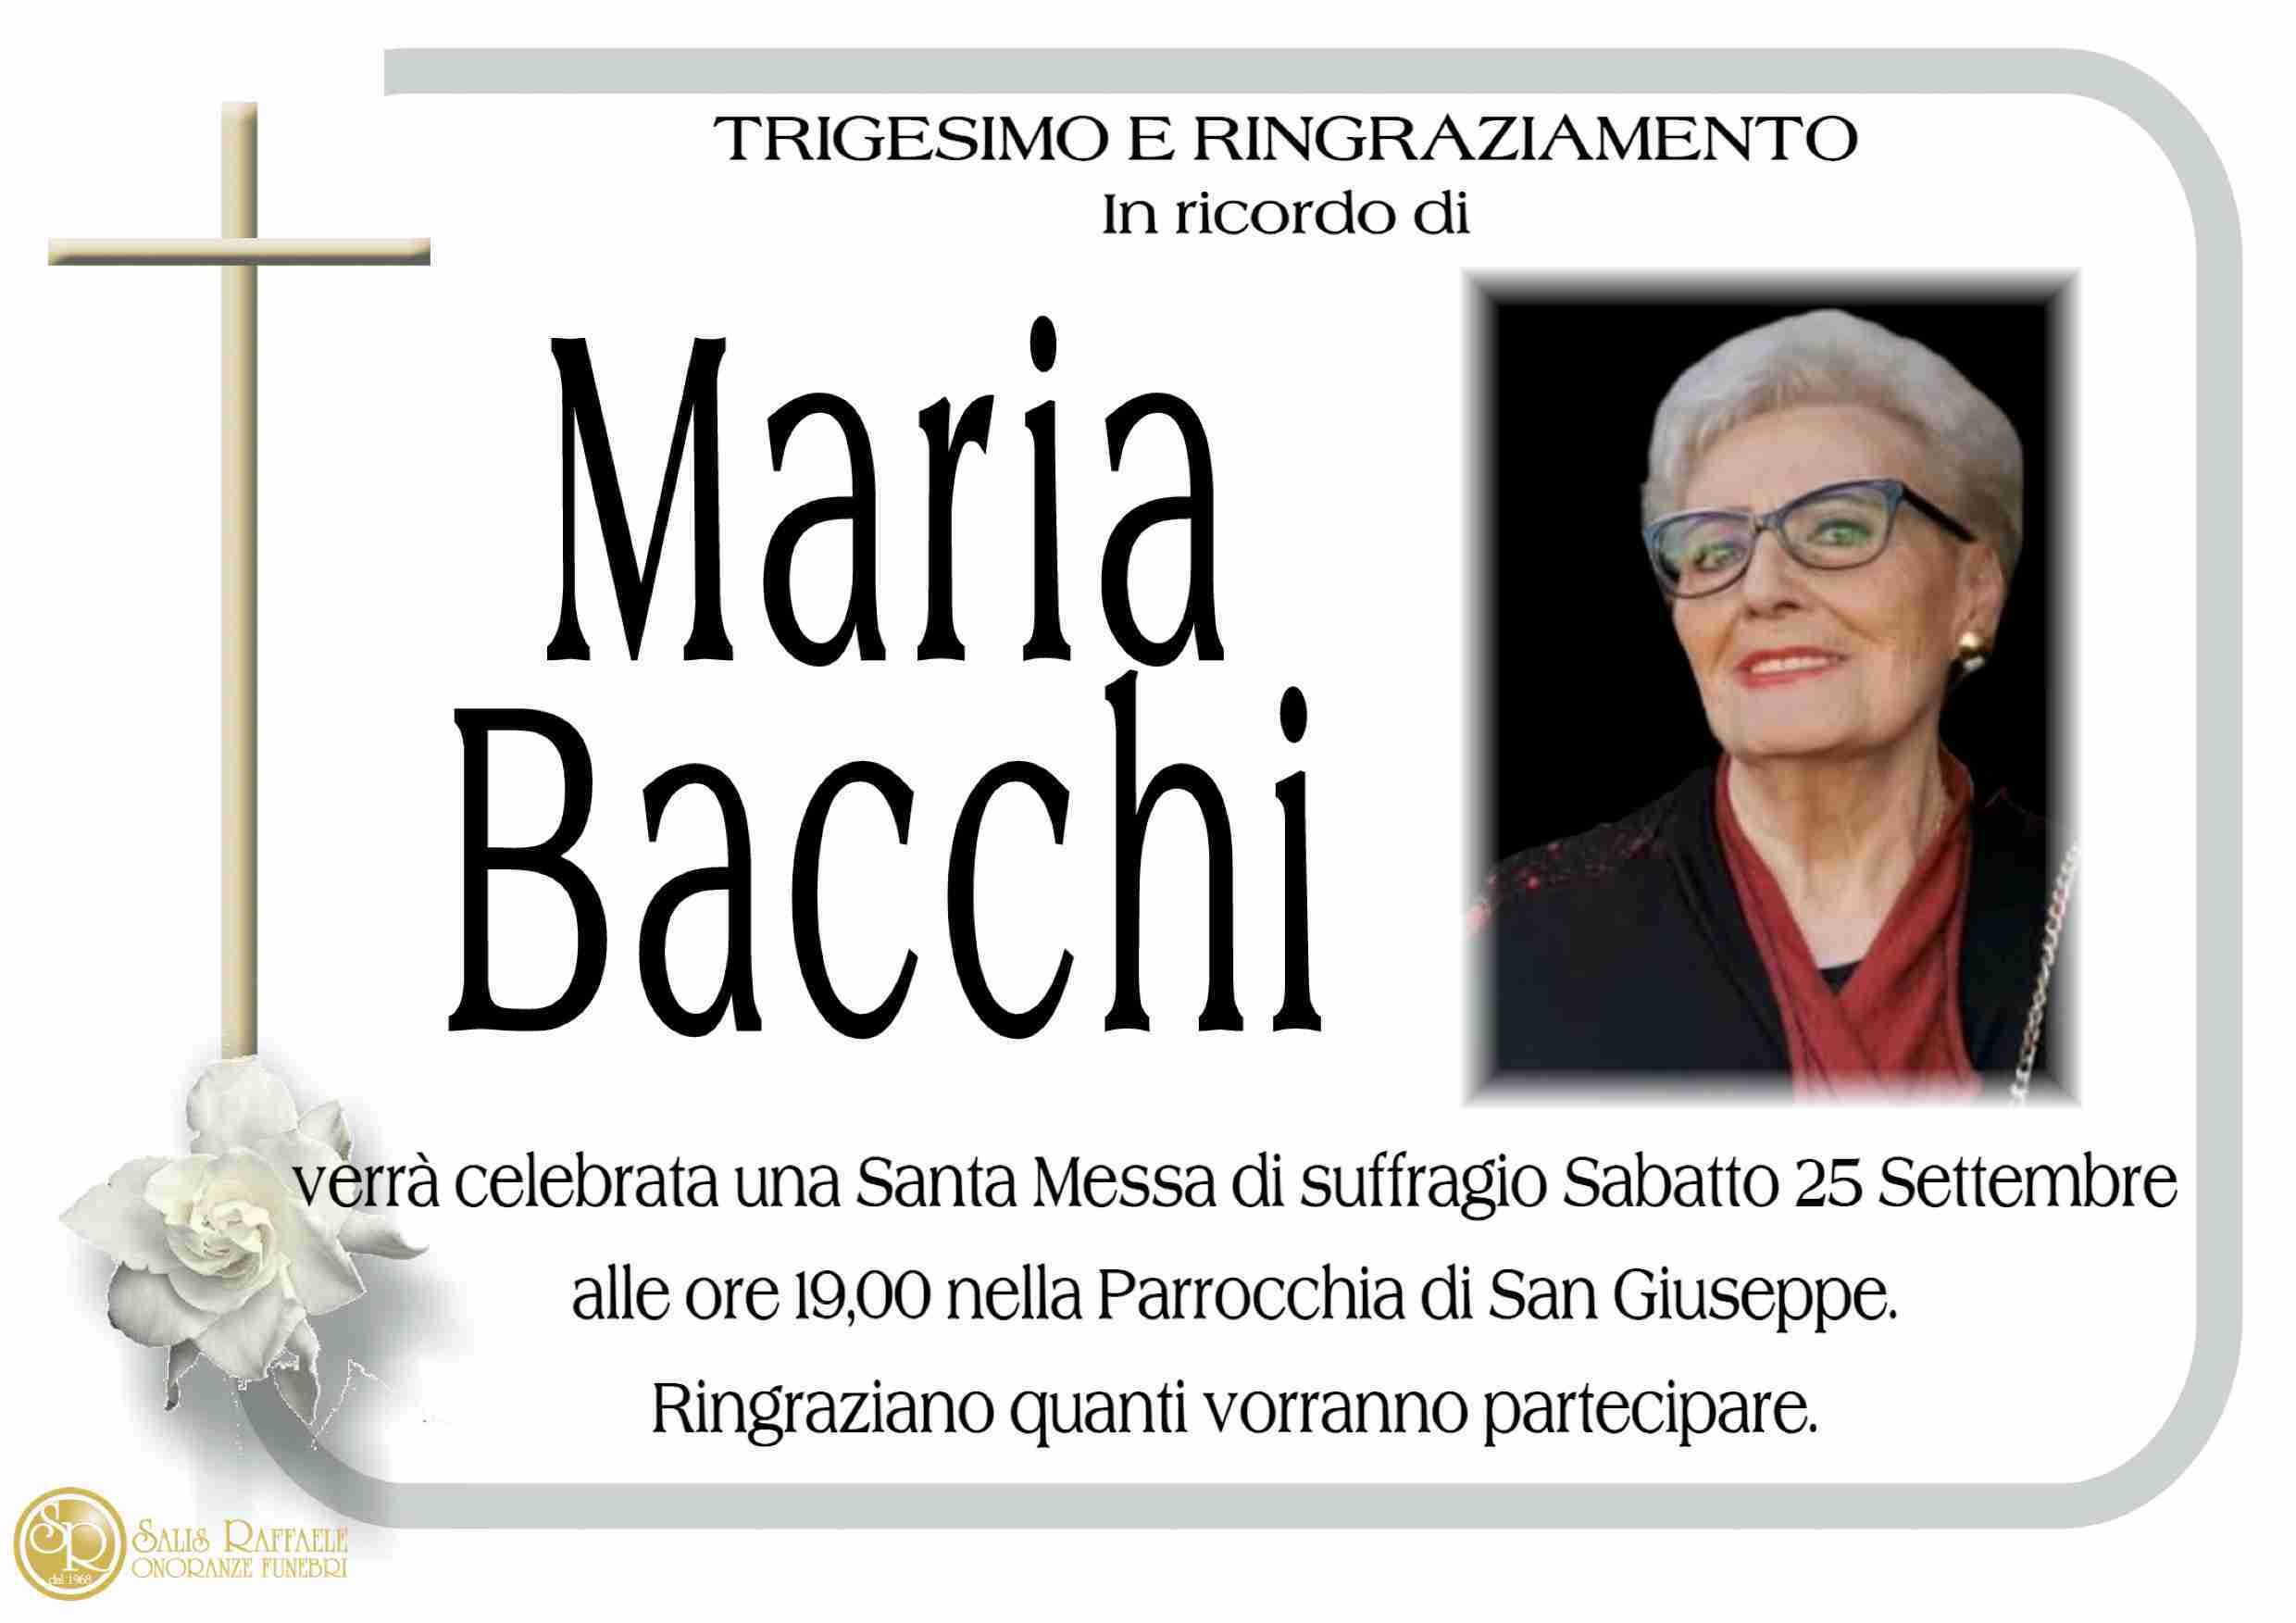 Maria Bacchi